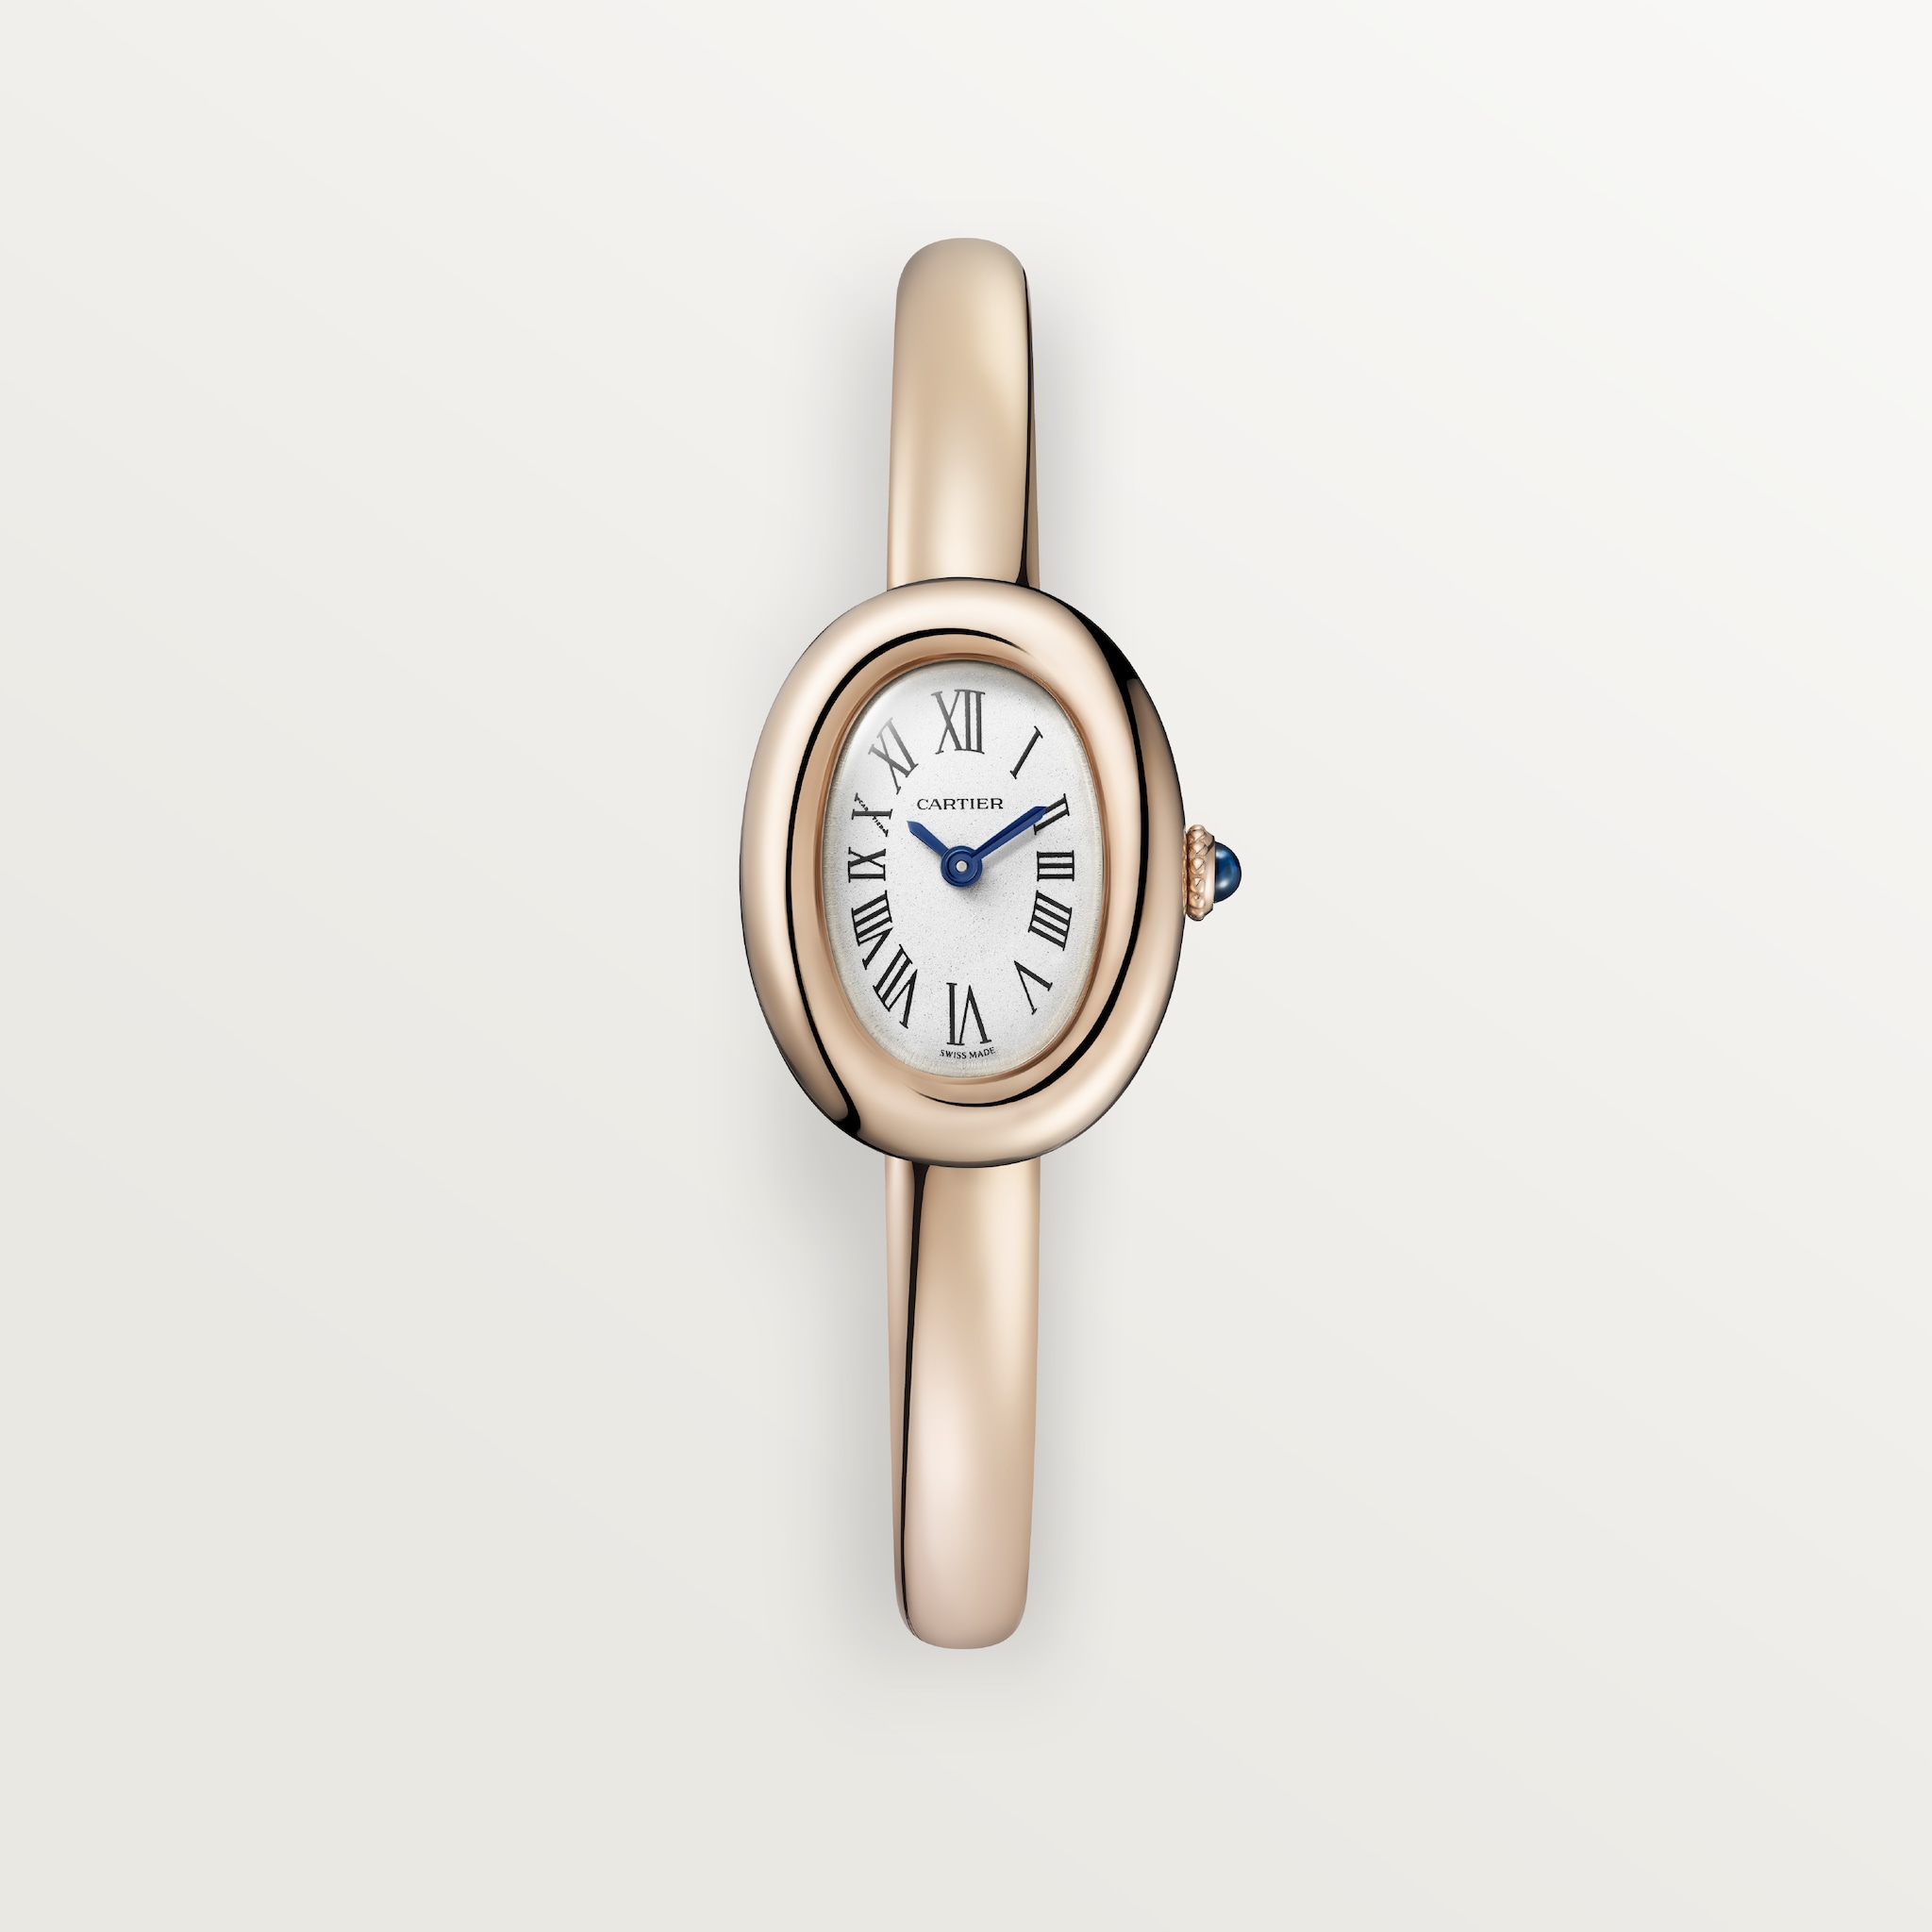 Baignoire watch (Size 16)Mini model, quartz movement, rose gold